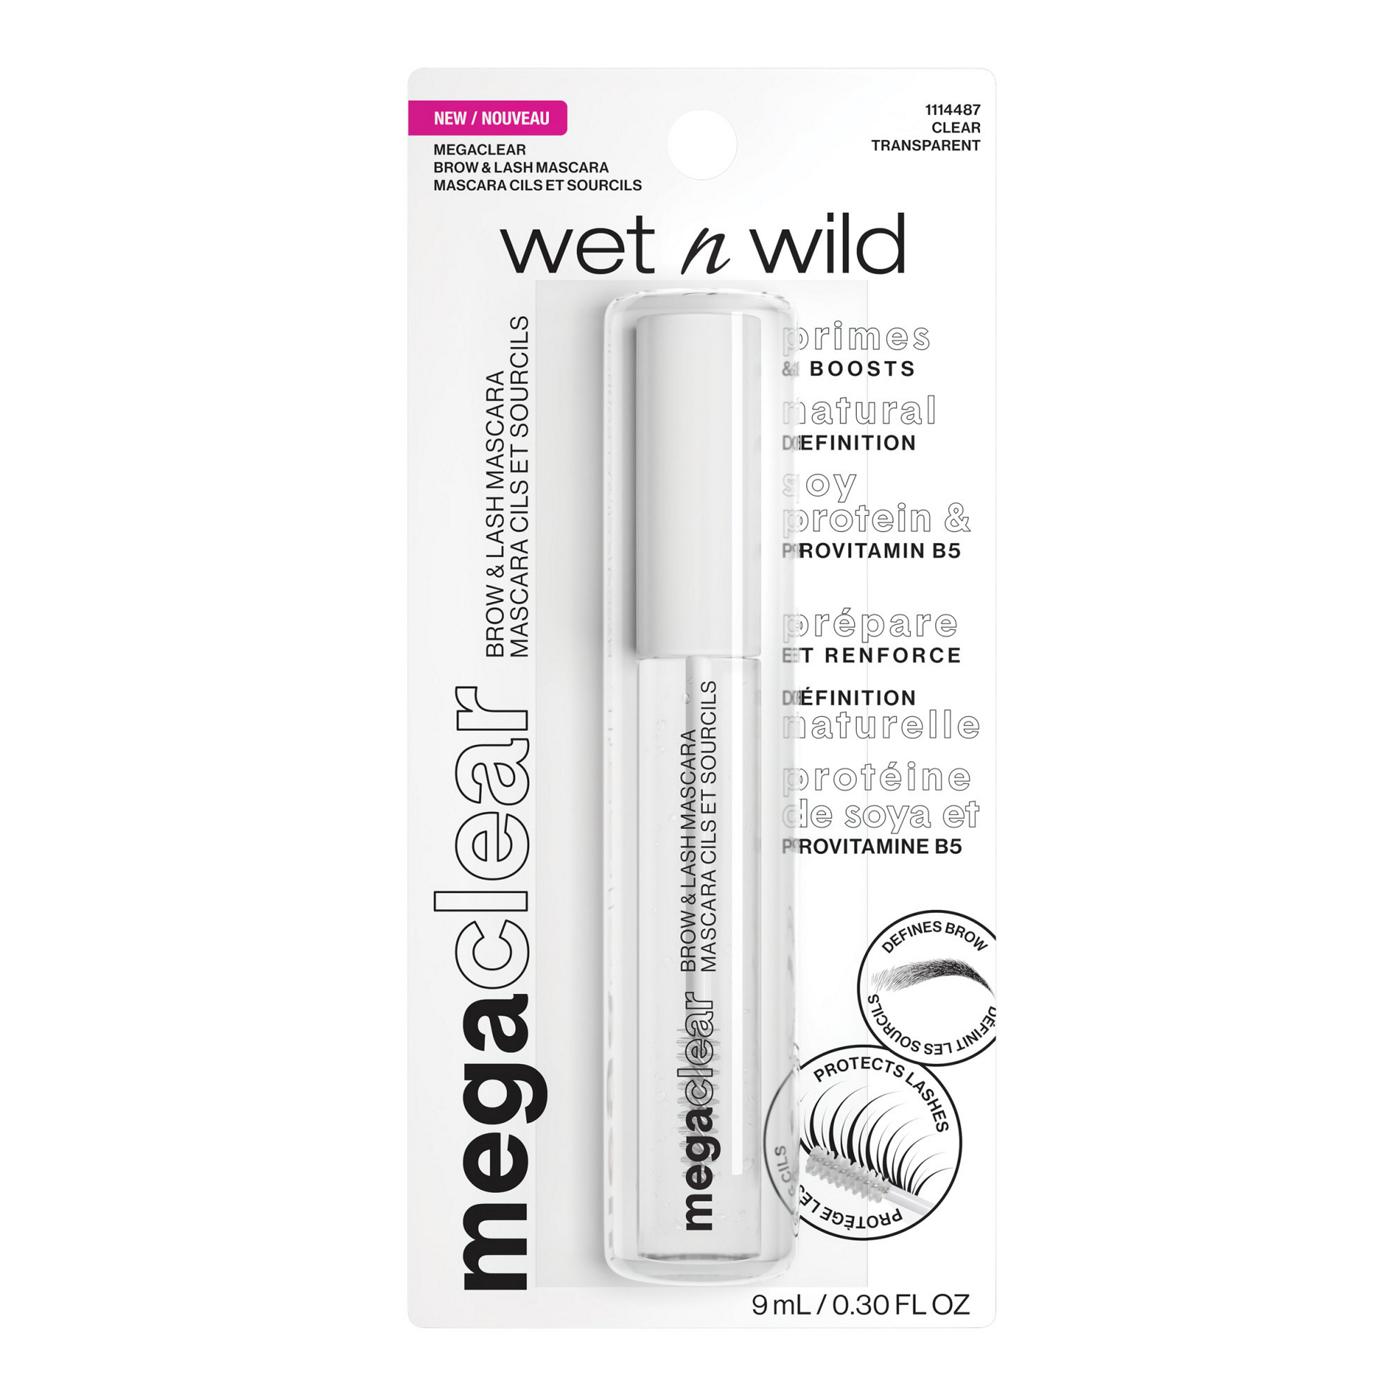 Wet n Wild Mega Clear Brow & Lash Mascara; image 1 of 4